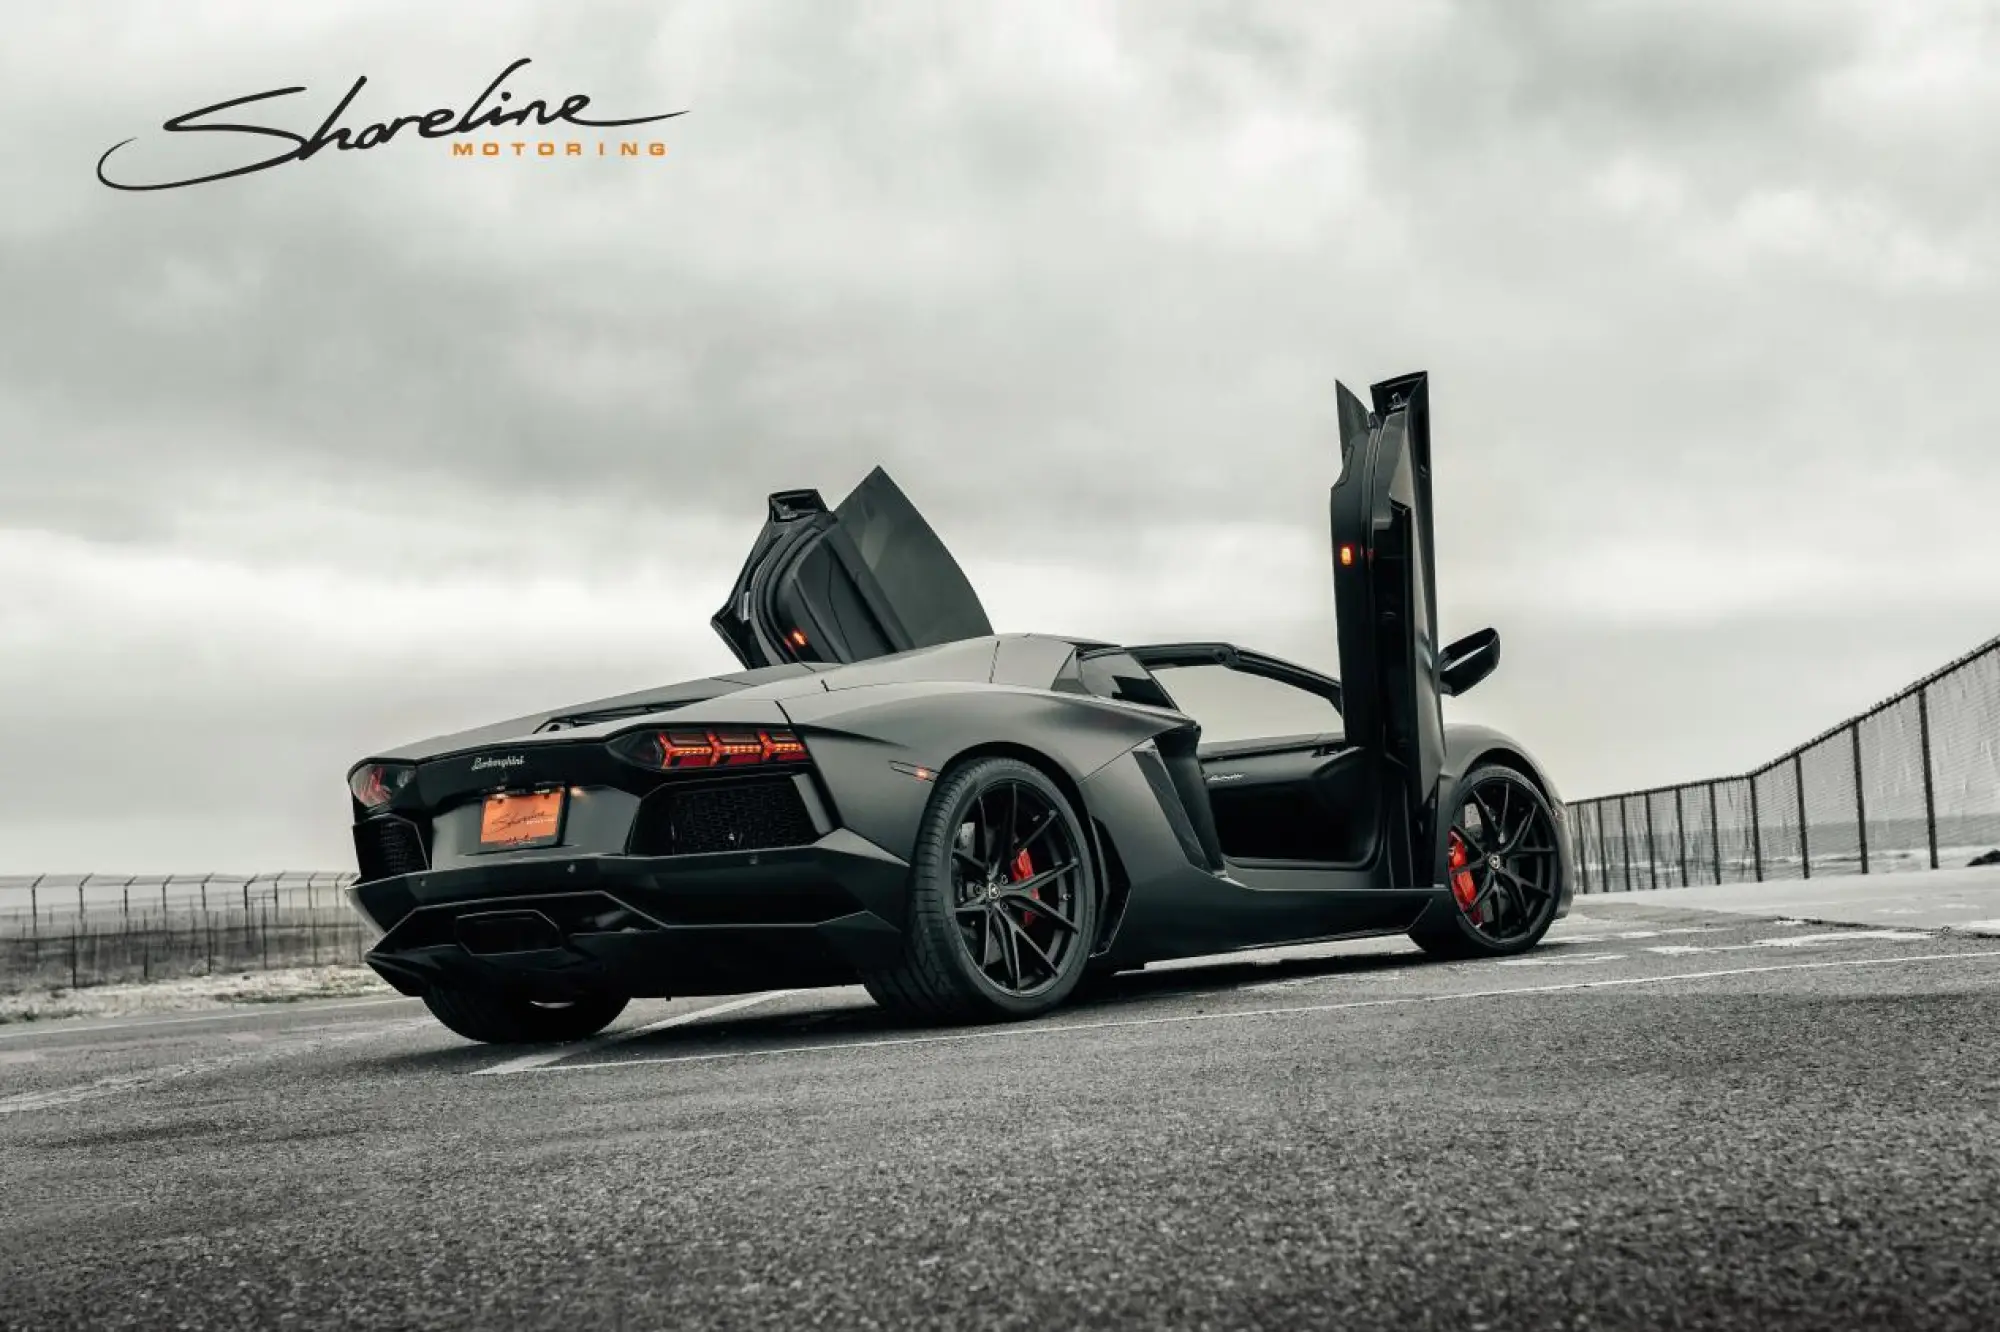 Lamborghini Aventador Roadster Matte Black by Shoreline Motoring - 2